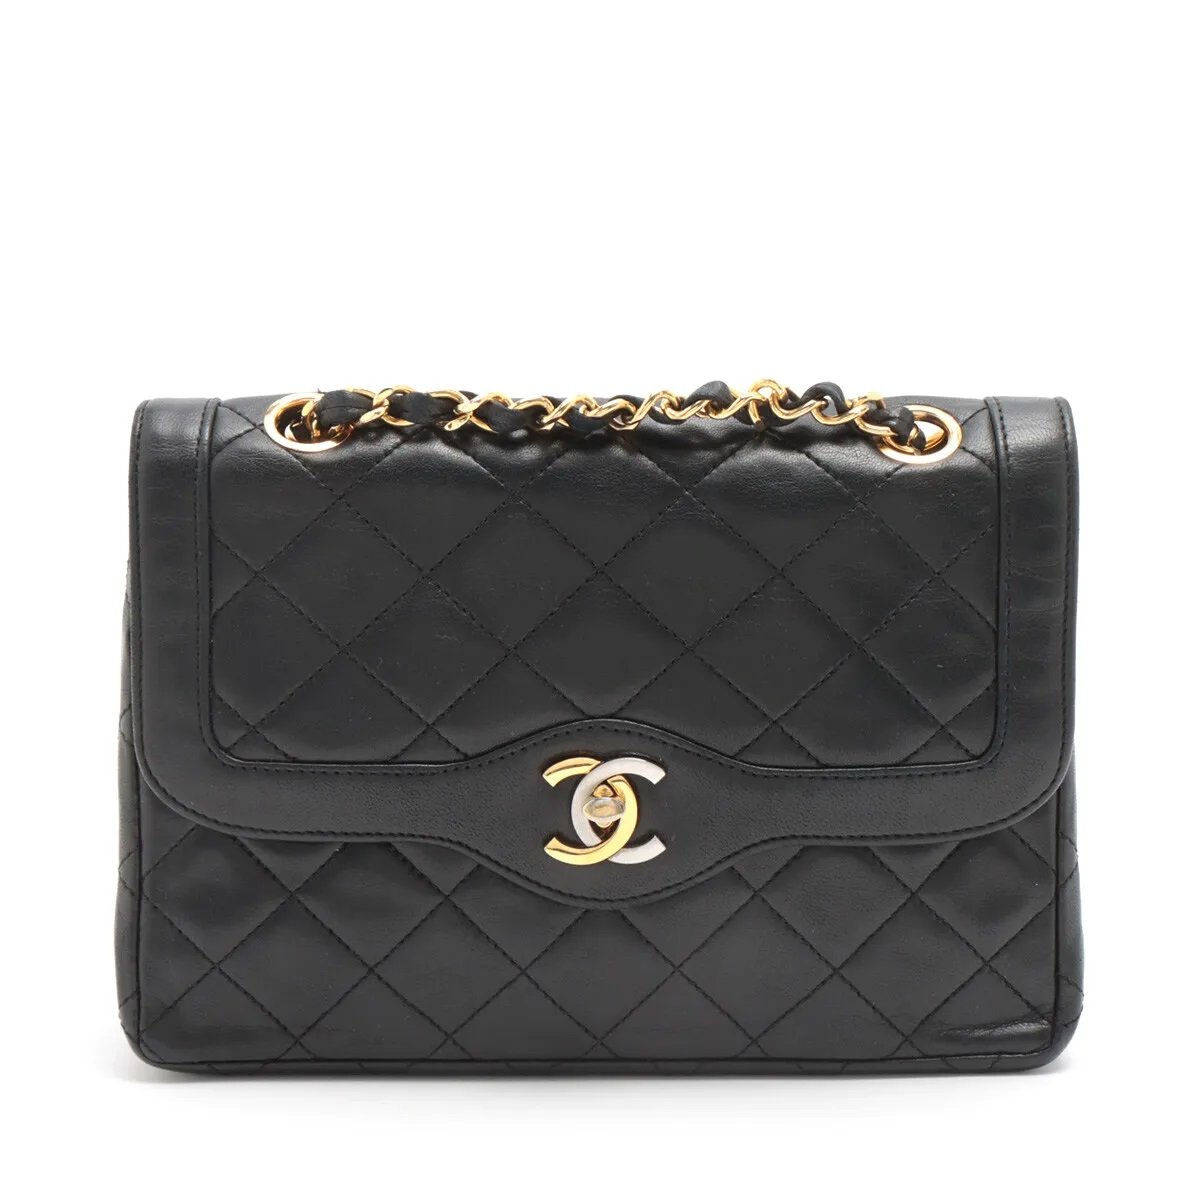 Chanel Paris Double-Flap Bag in Black.jpg